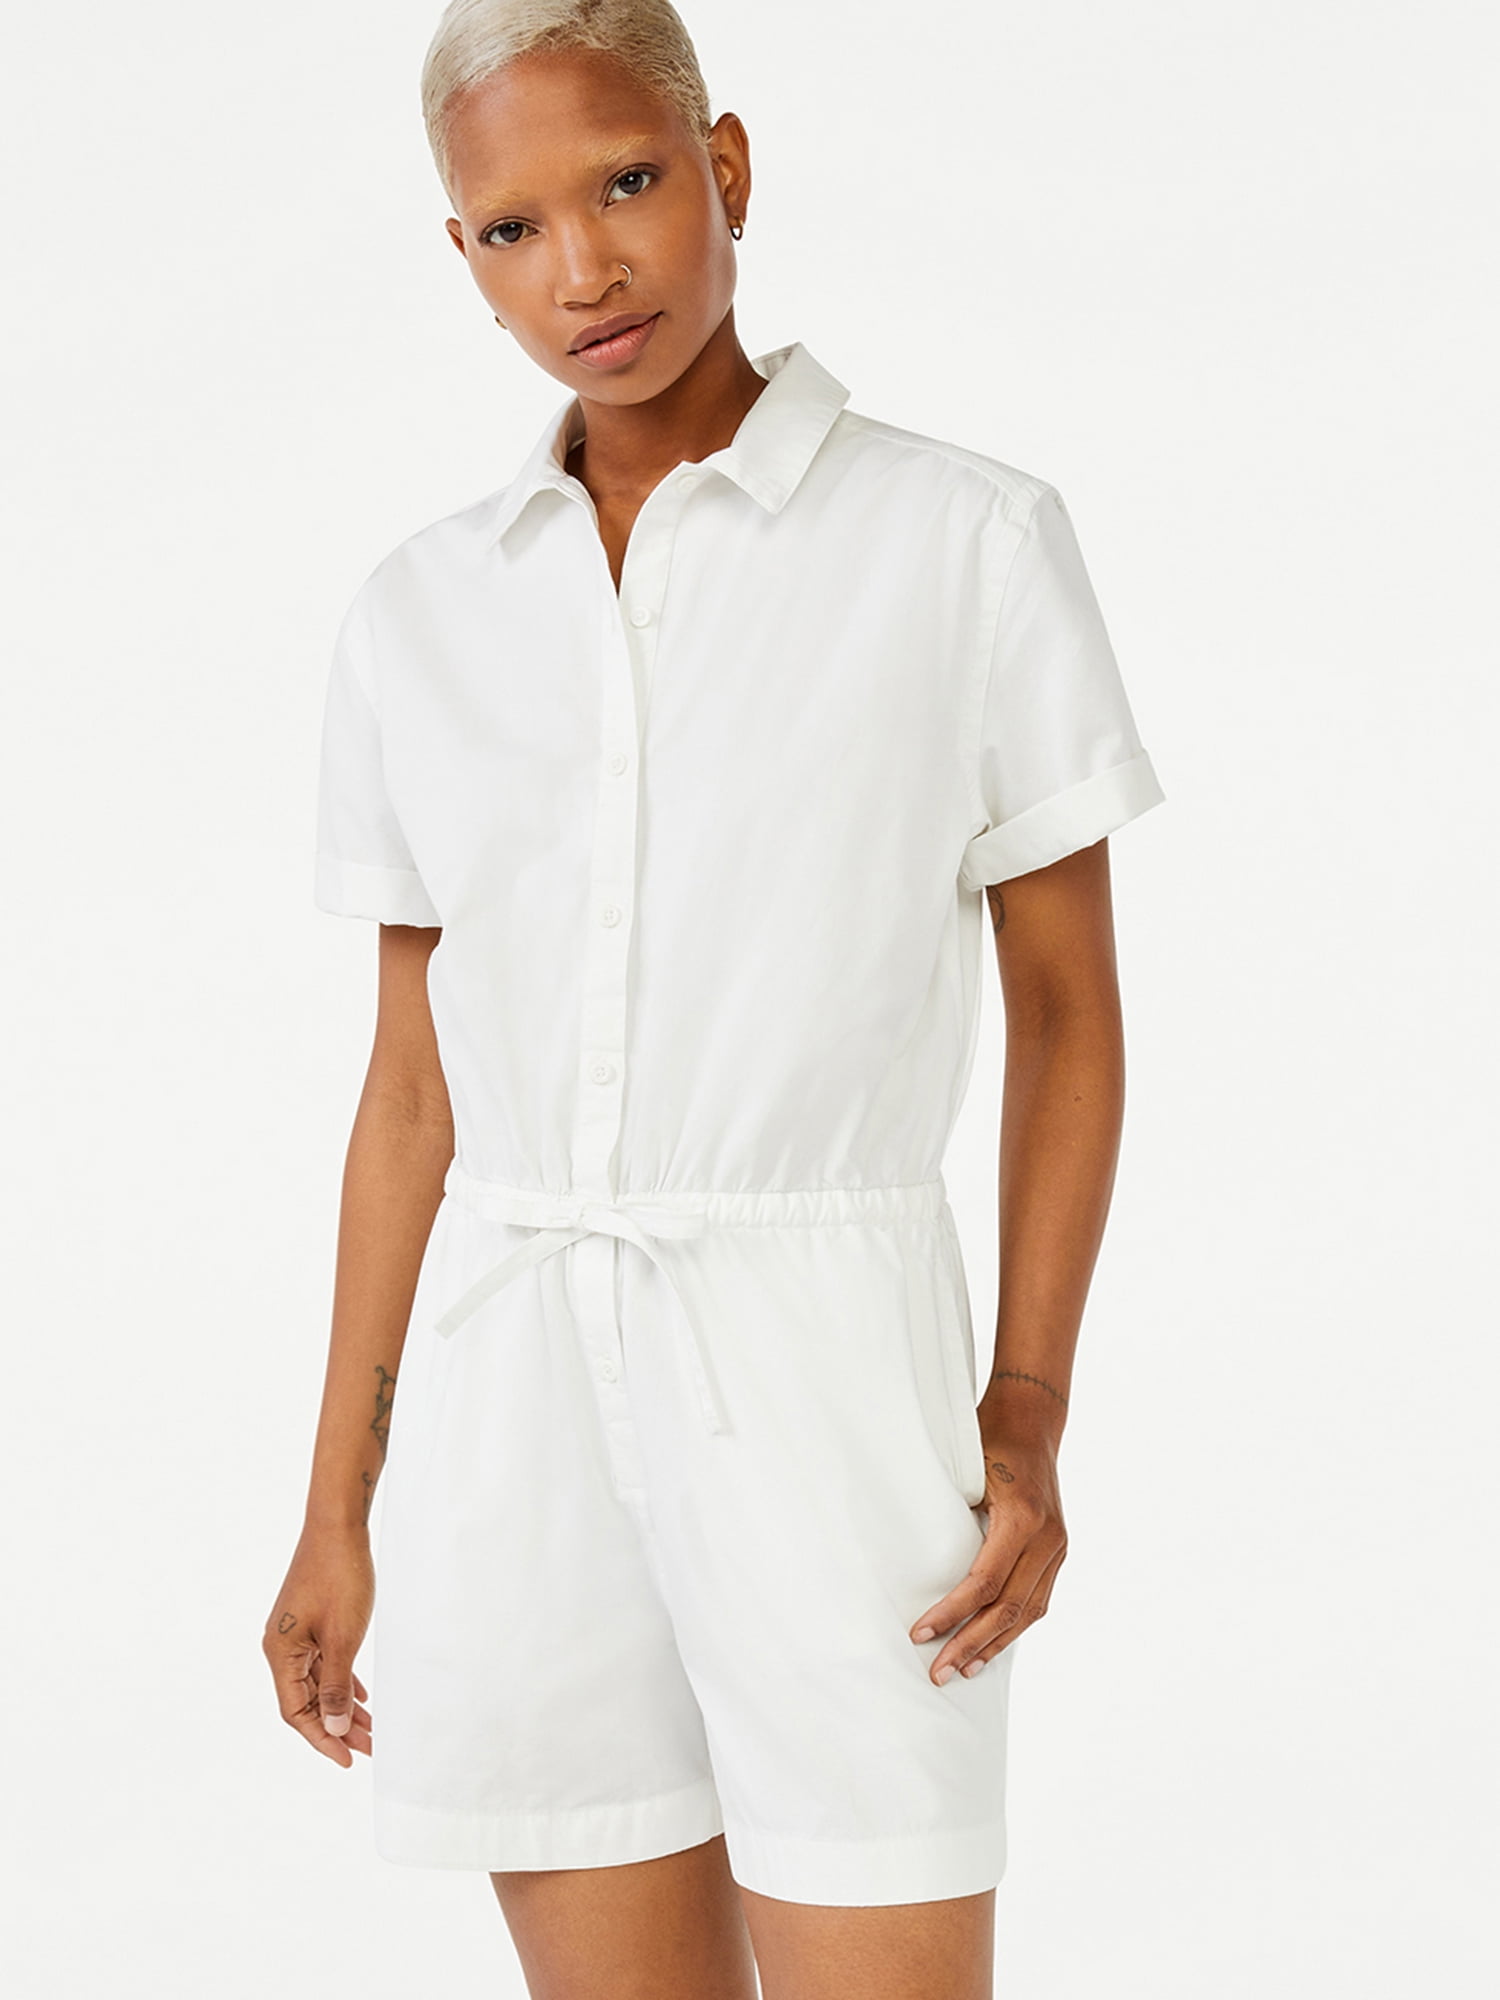 Short Sleeve Plain T-Shirt White Adult Romper Bodysuit anonymous list 